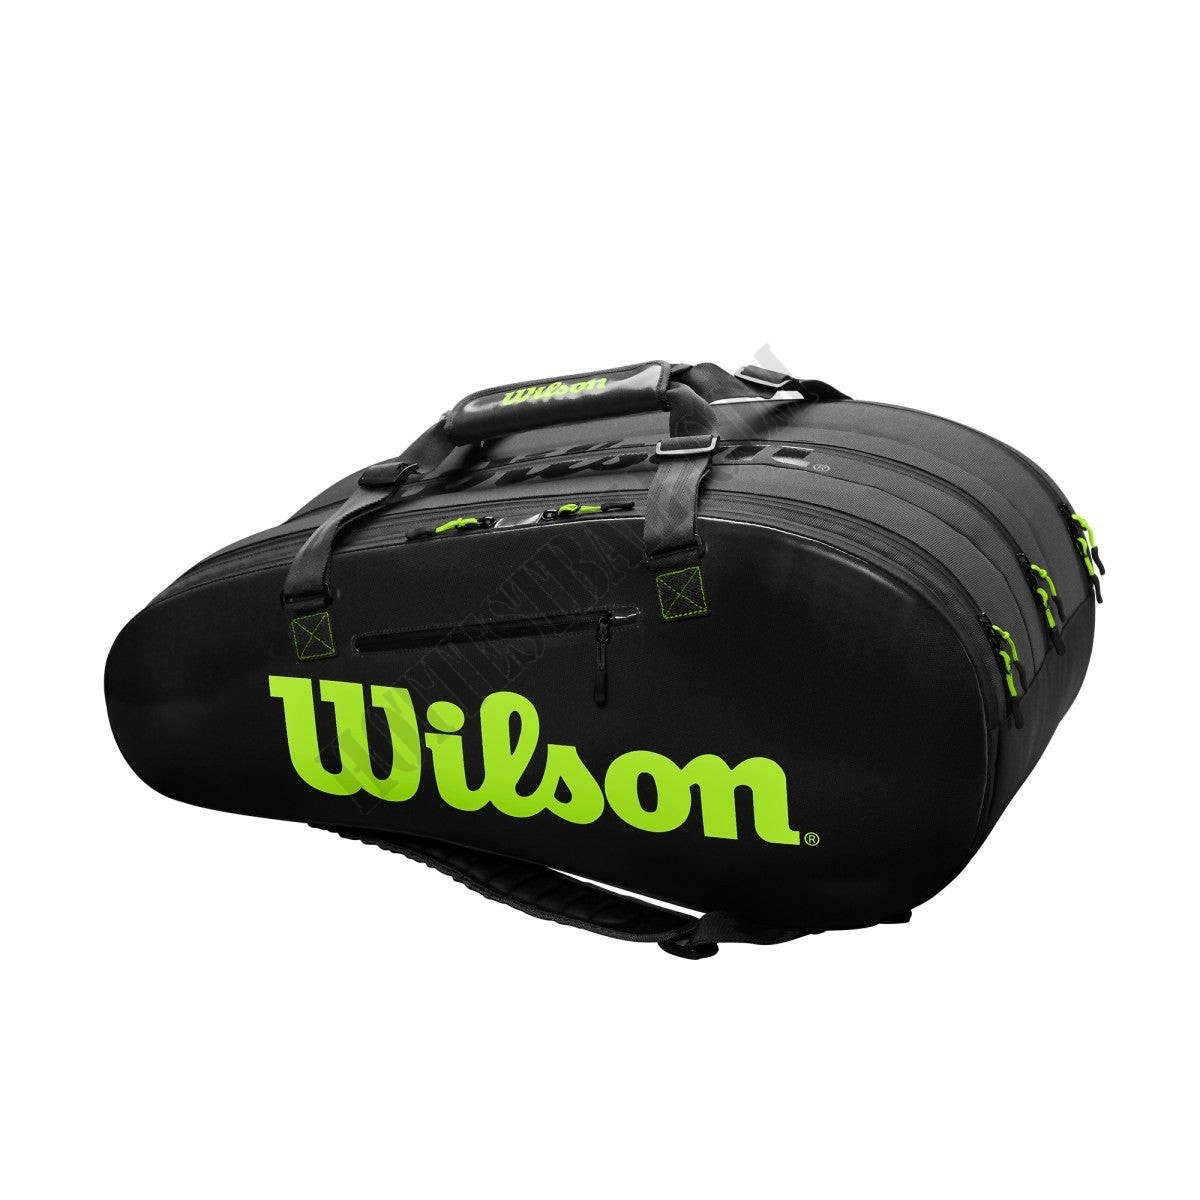 2019 Super Tour 3 Compartment Tennis Bag - Wilson Discount Store - -0